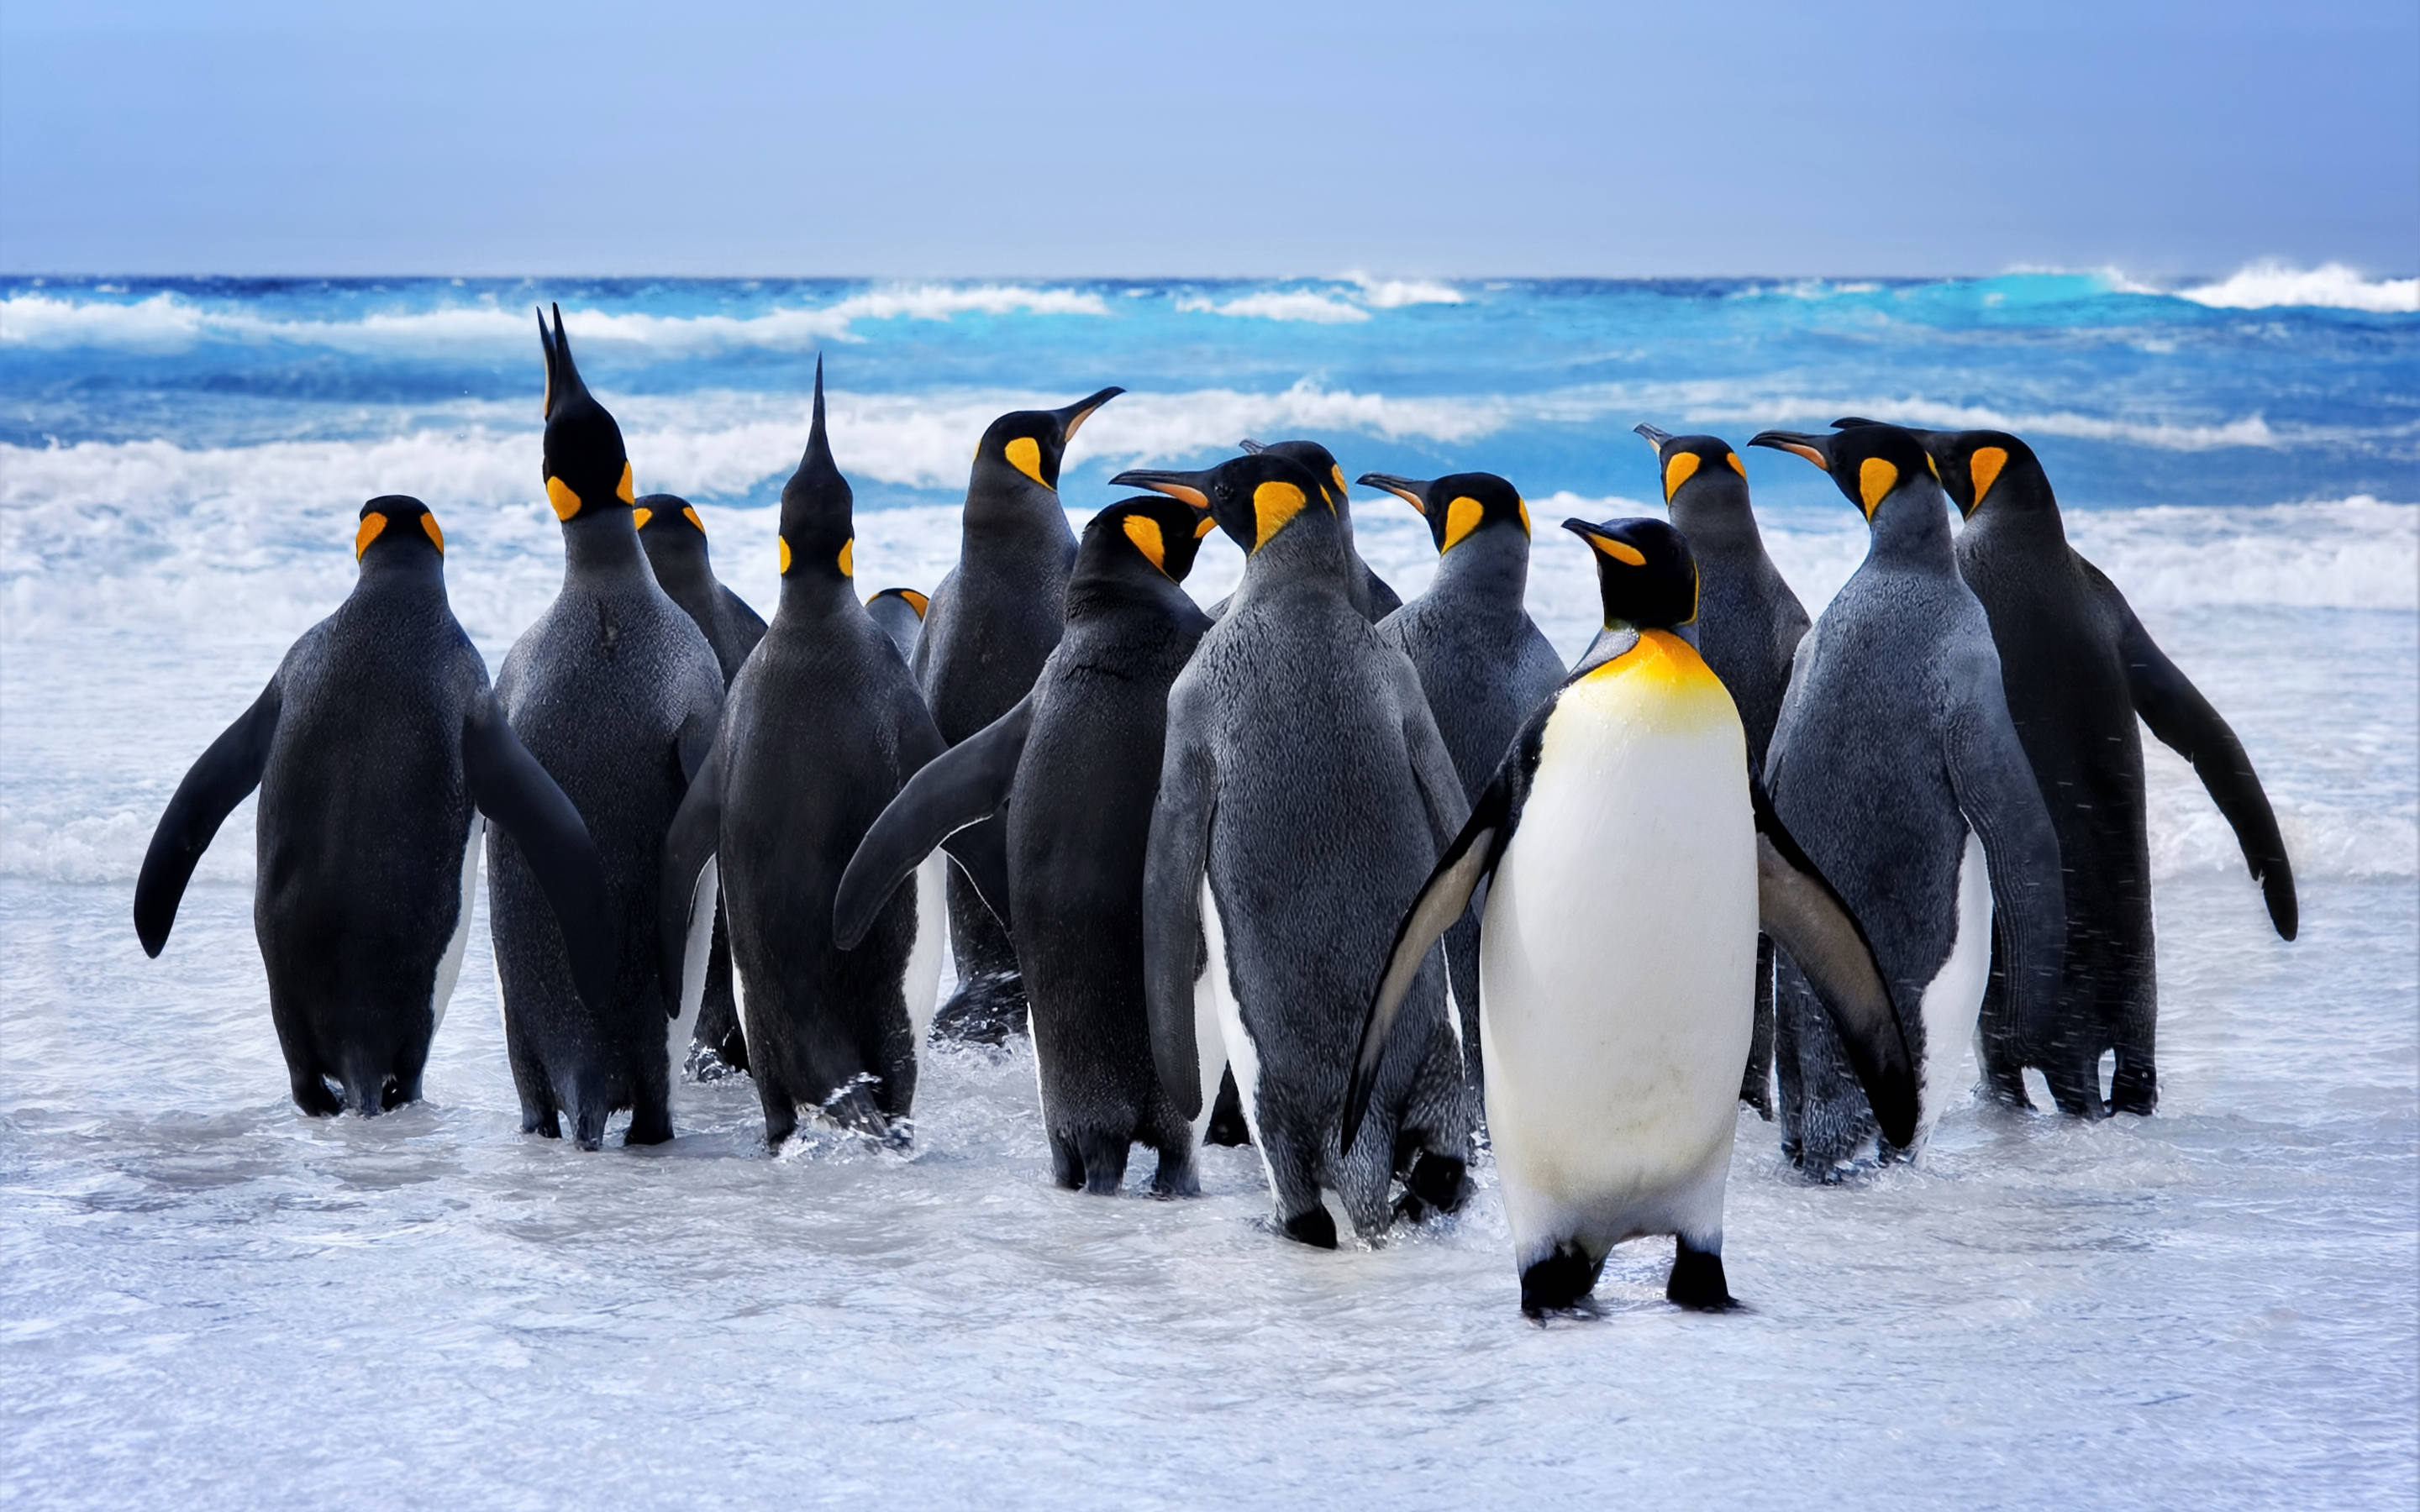 King penguin at beach, animals, 2880x1800 wallpaper